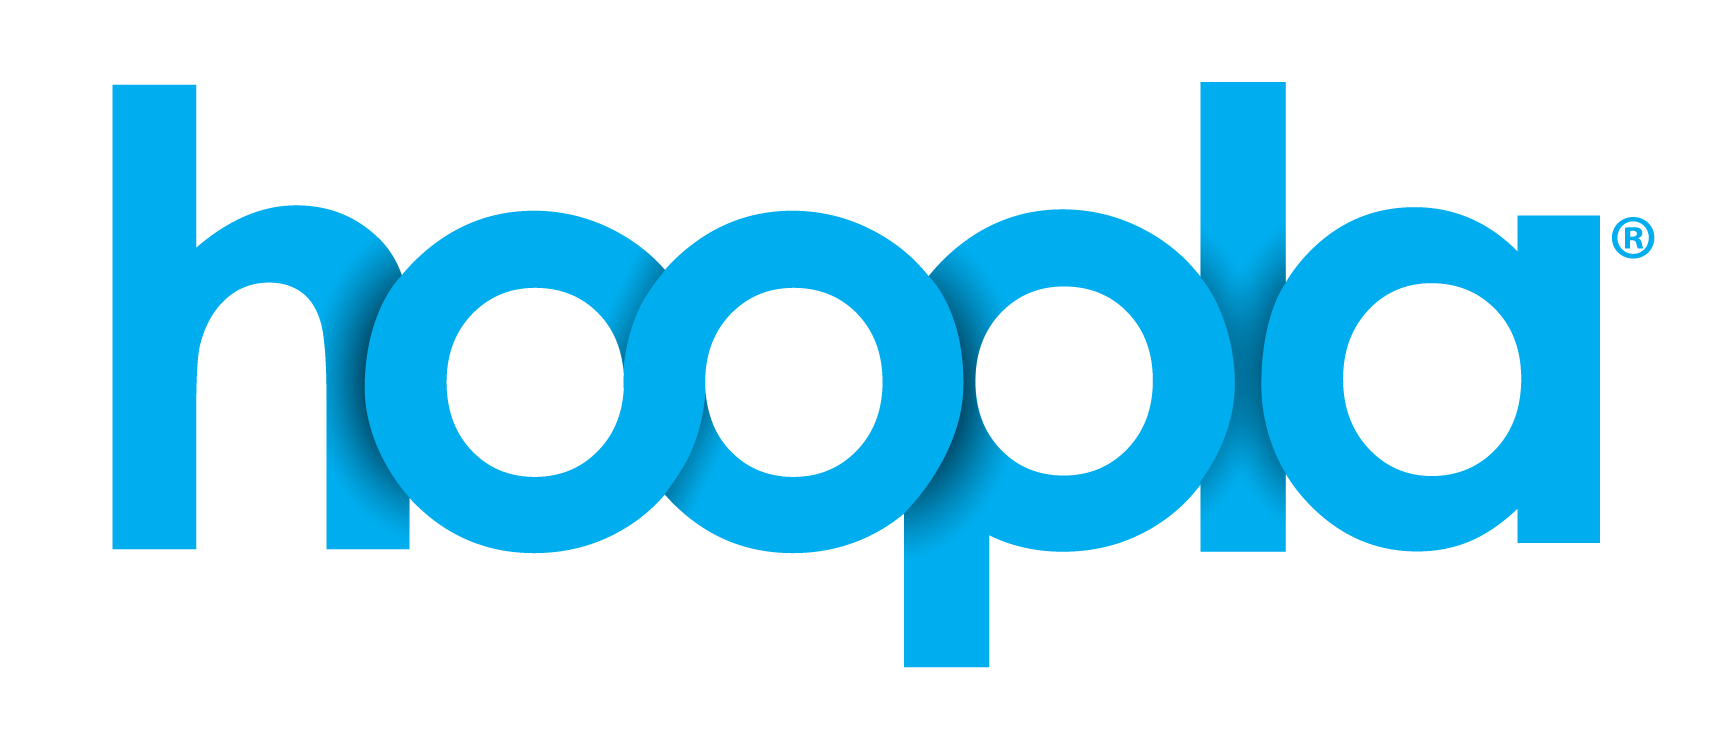 hoopla-logo-blue